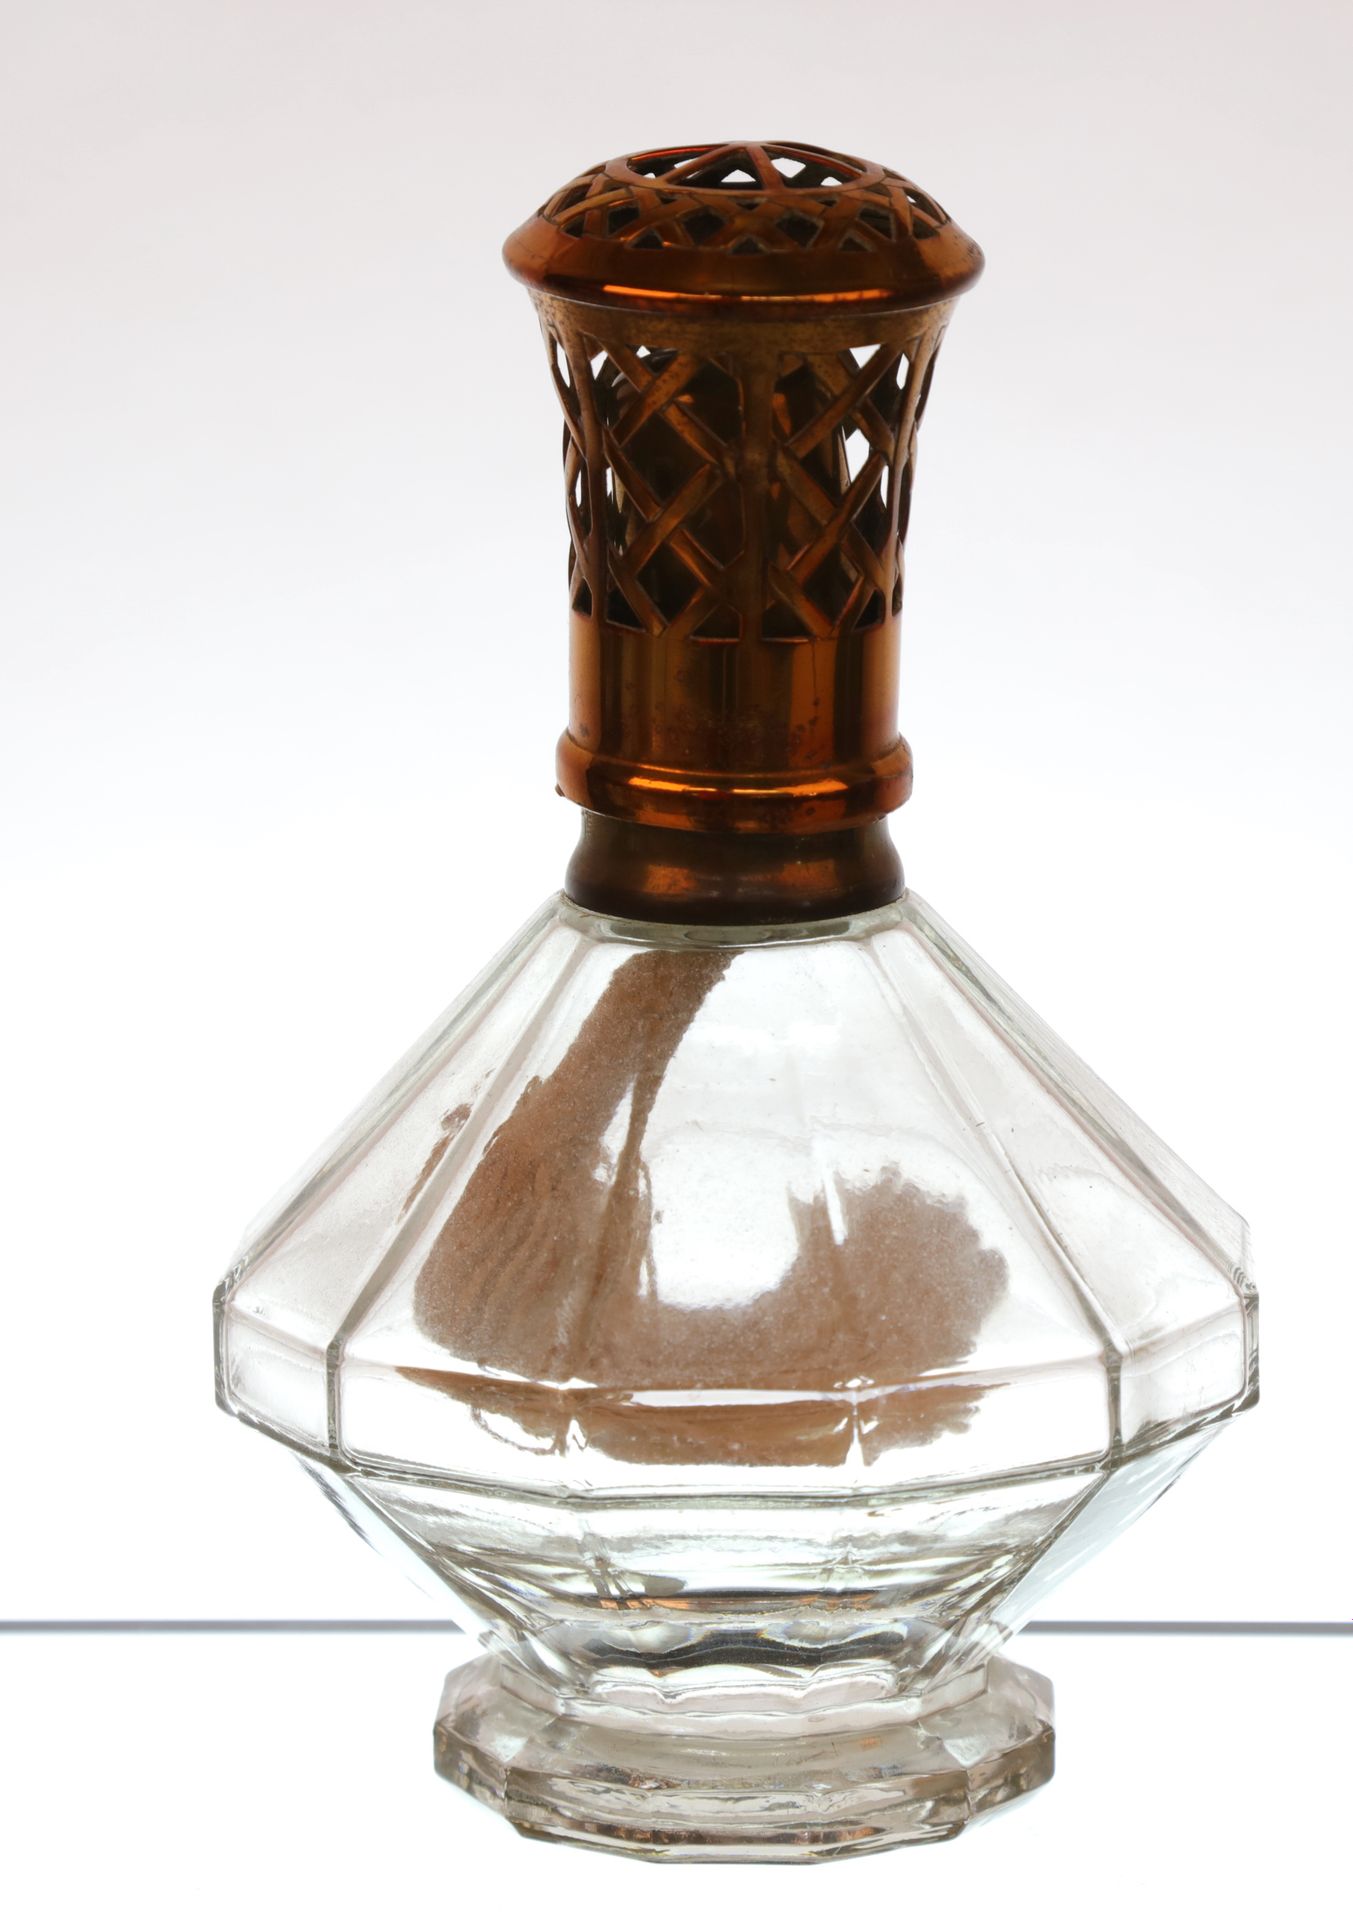 Null Shepherd's lamp in glass, height: 17 cm.